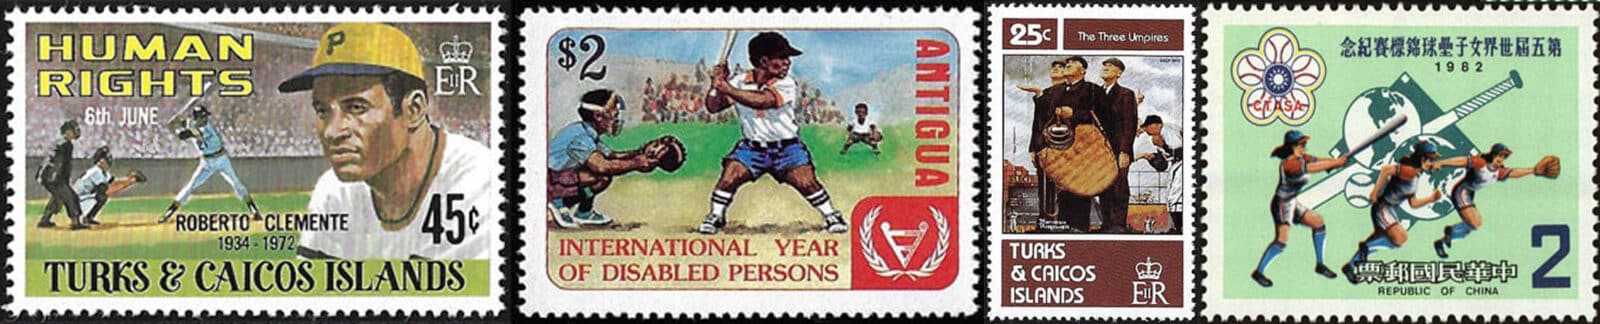 International Baseball Postage Stamps (1980 to 1984)